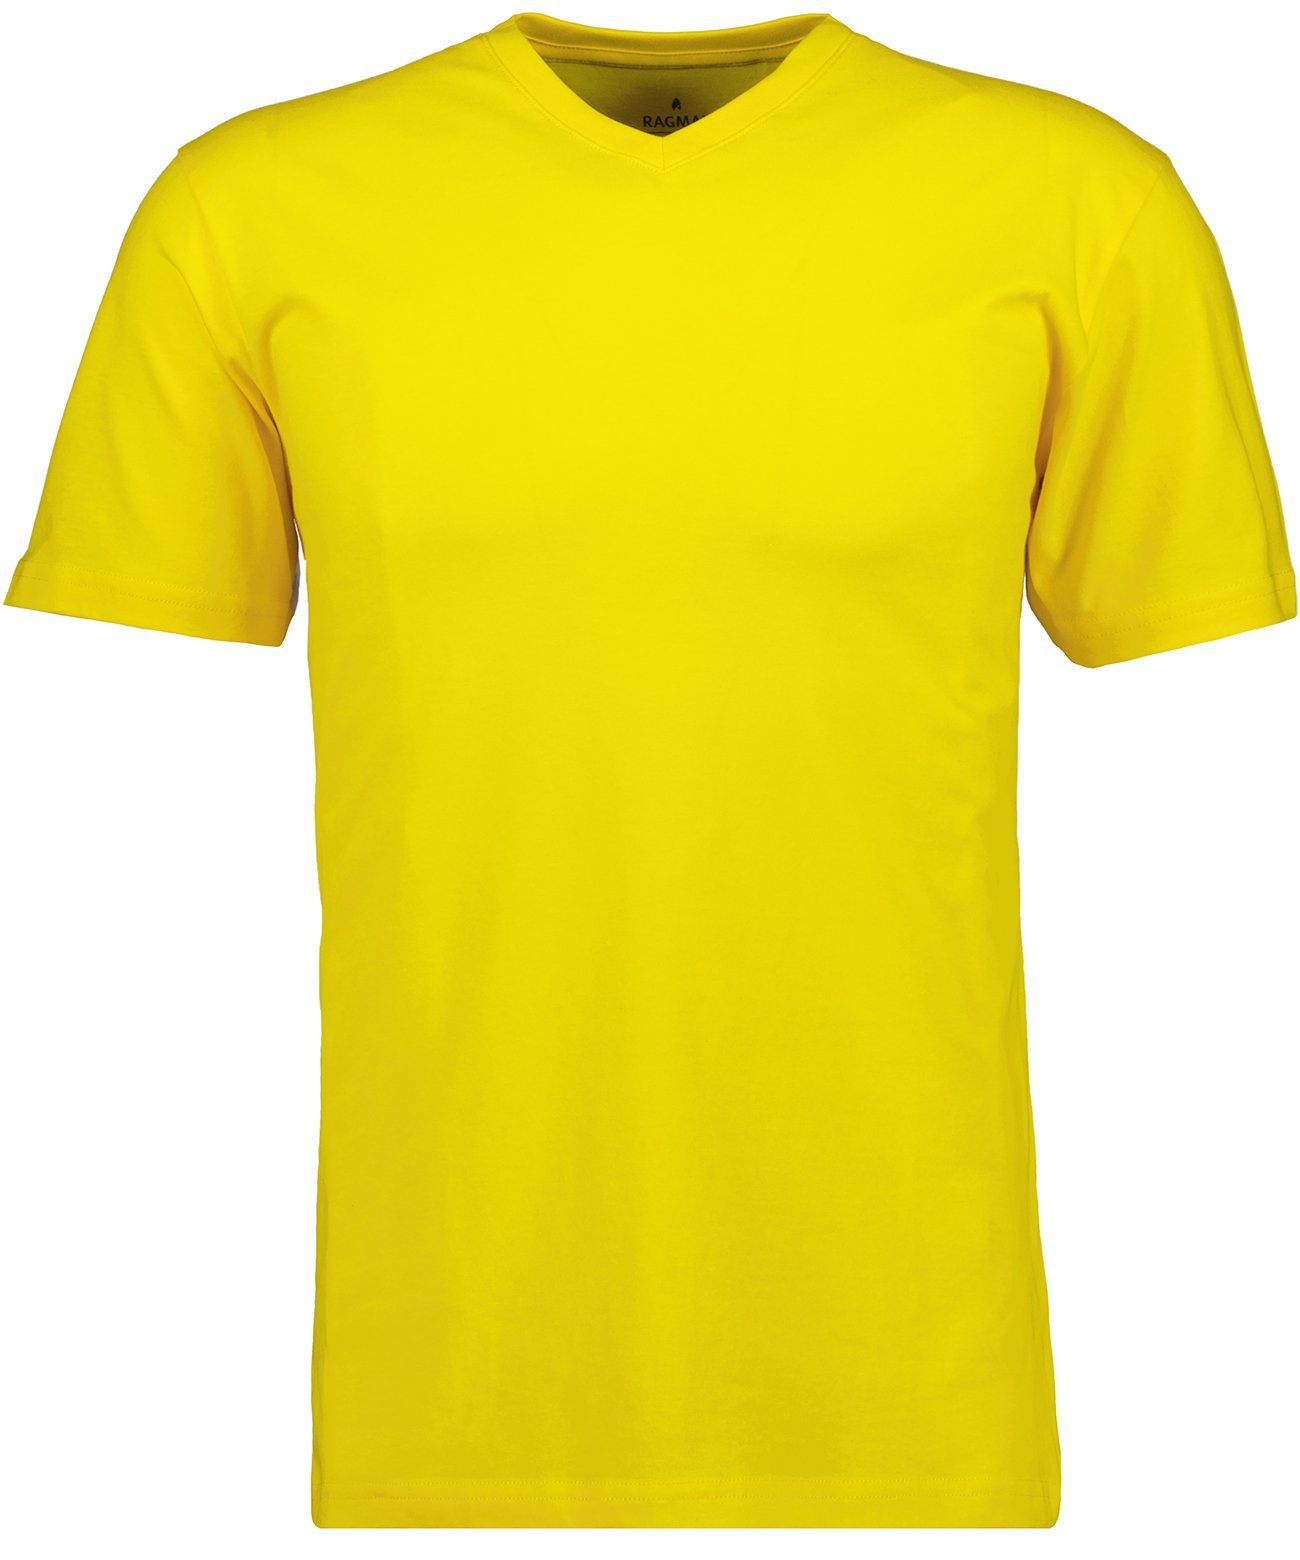 T-Shirt RAGMAN Limone-502